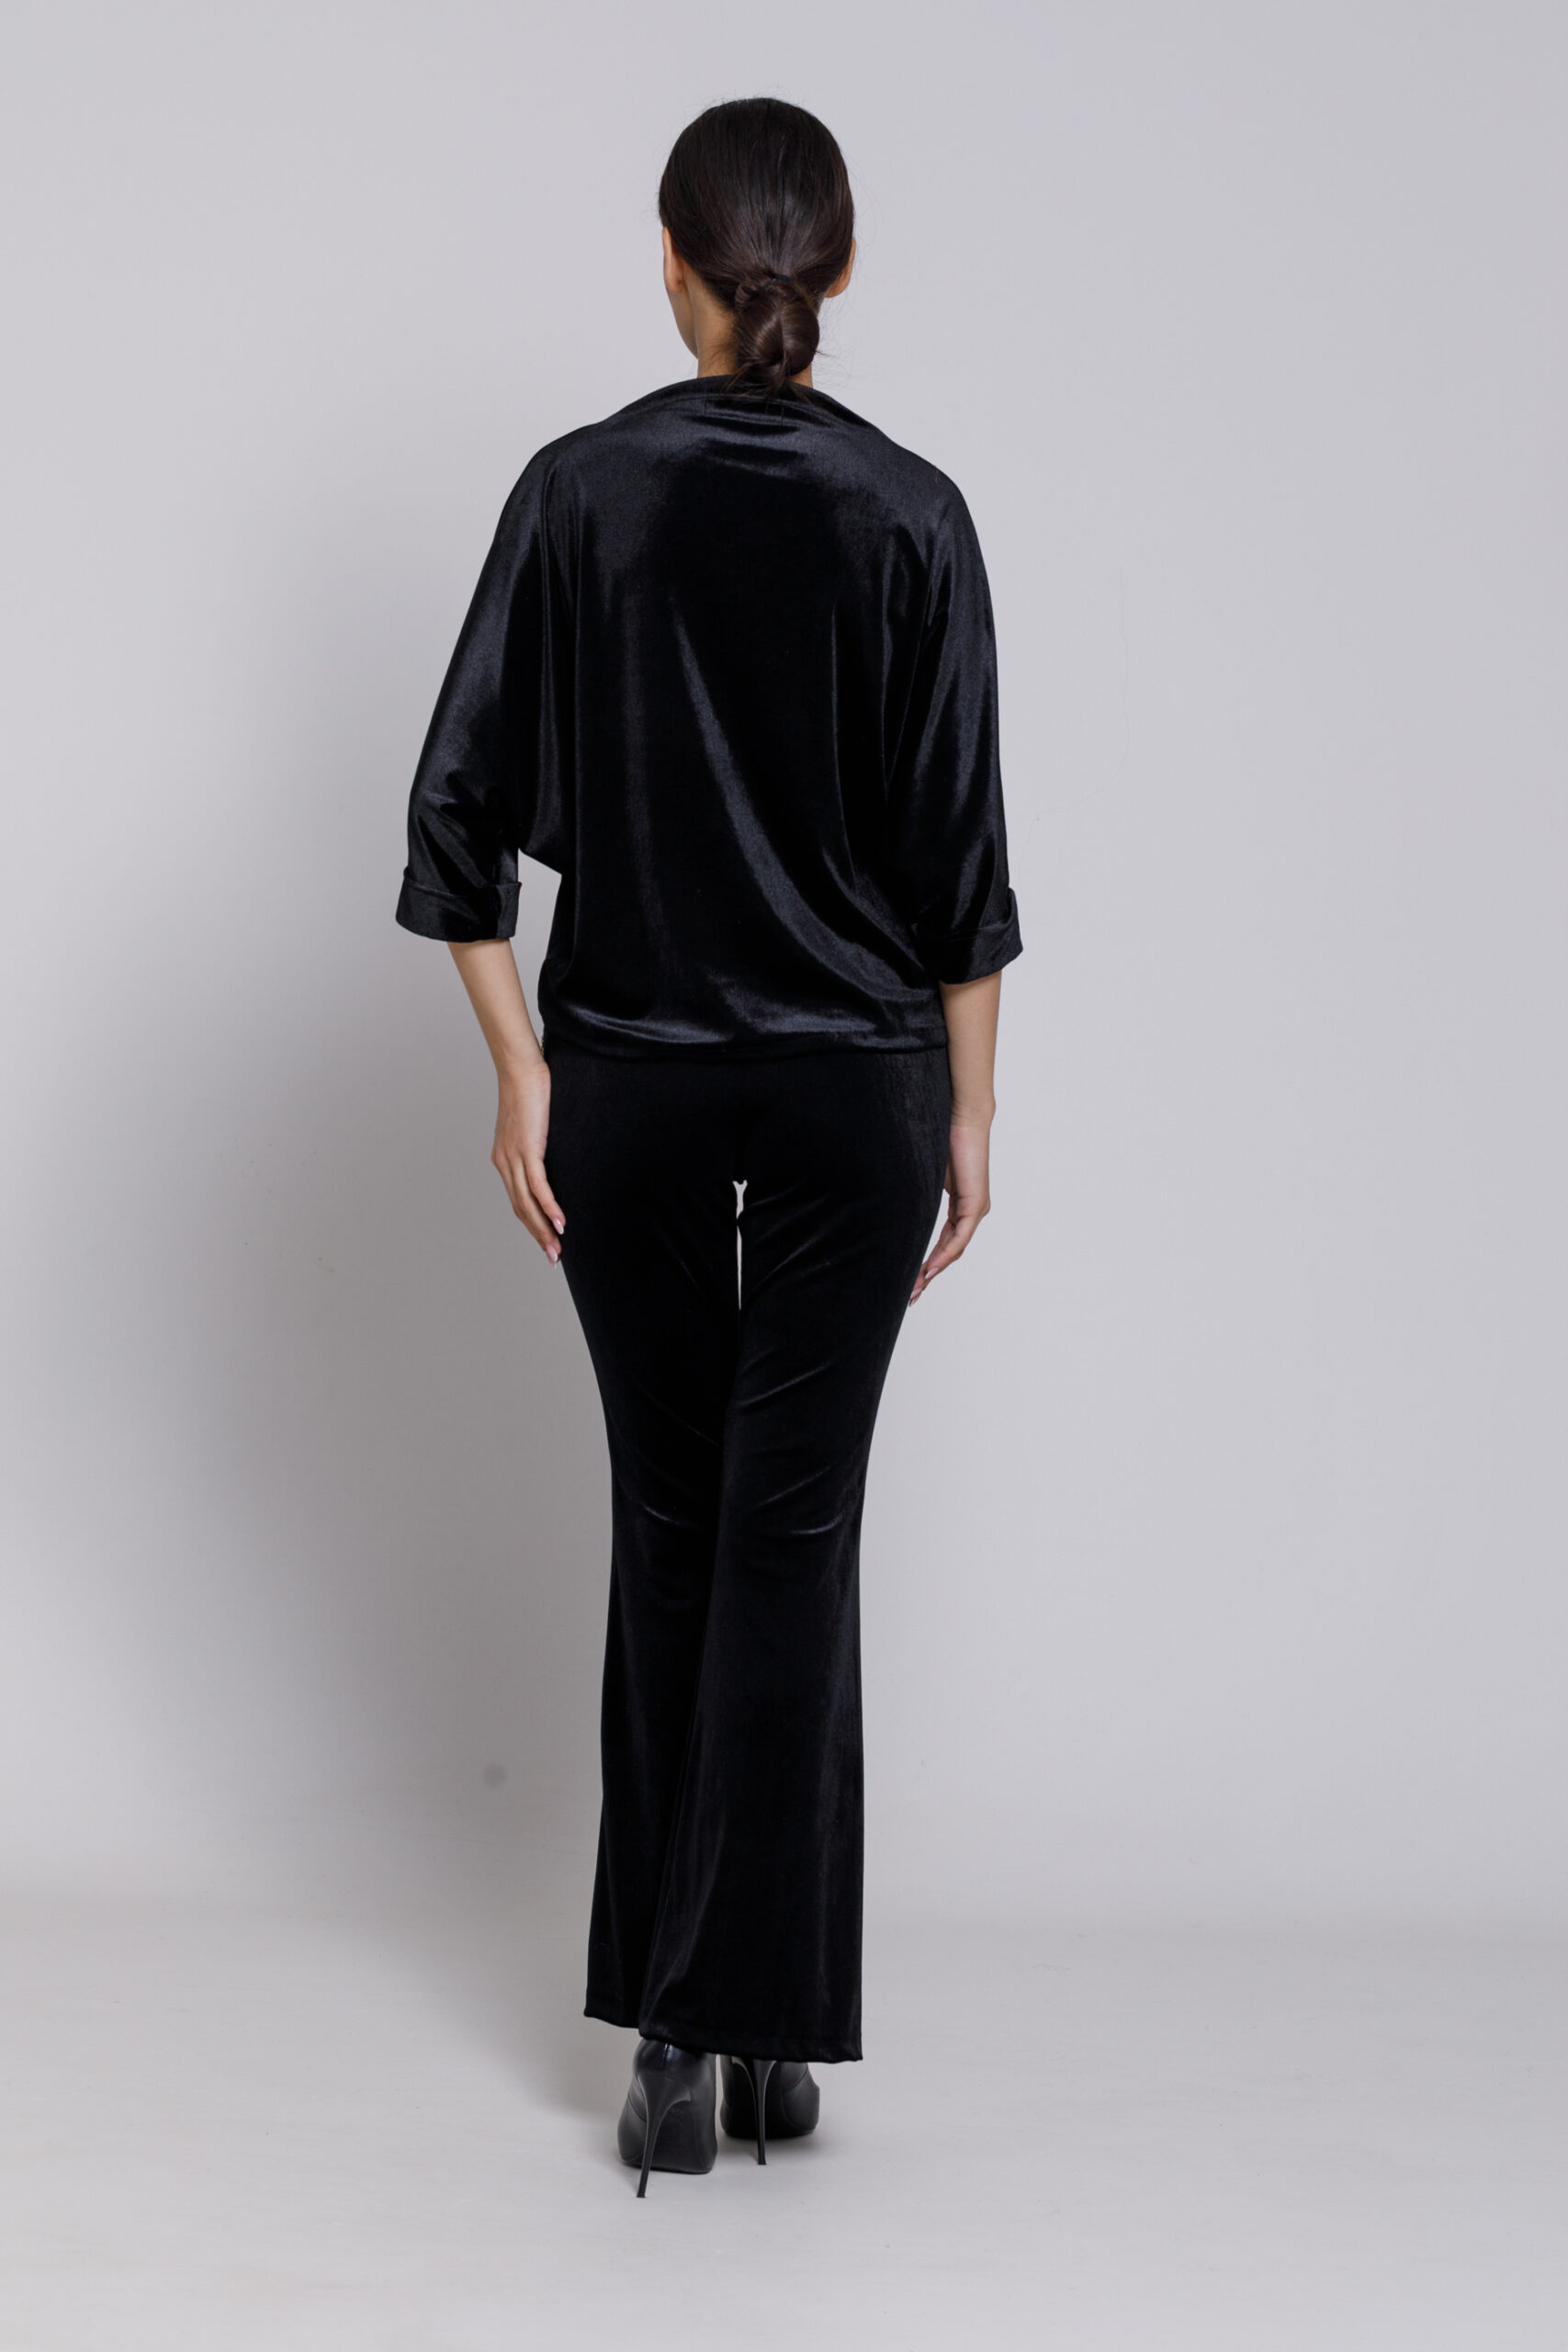 Black velvet NICO blouse. Natural fabrics, original design, handmade embroidery